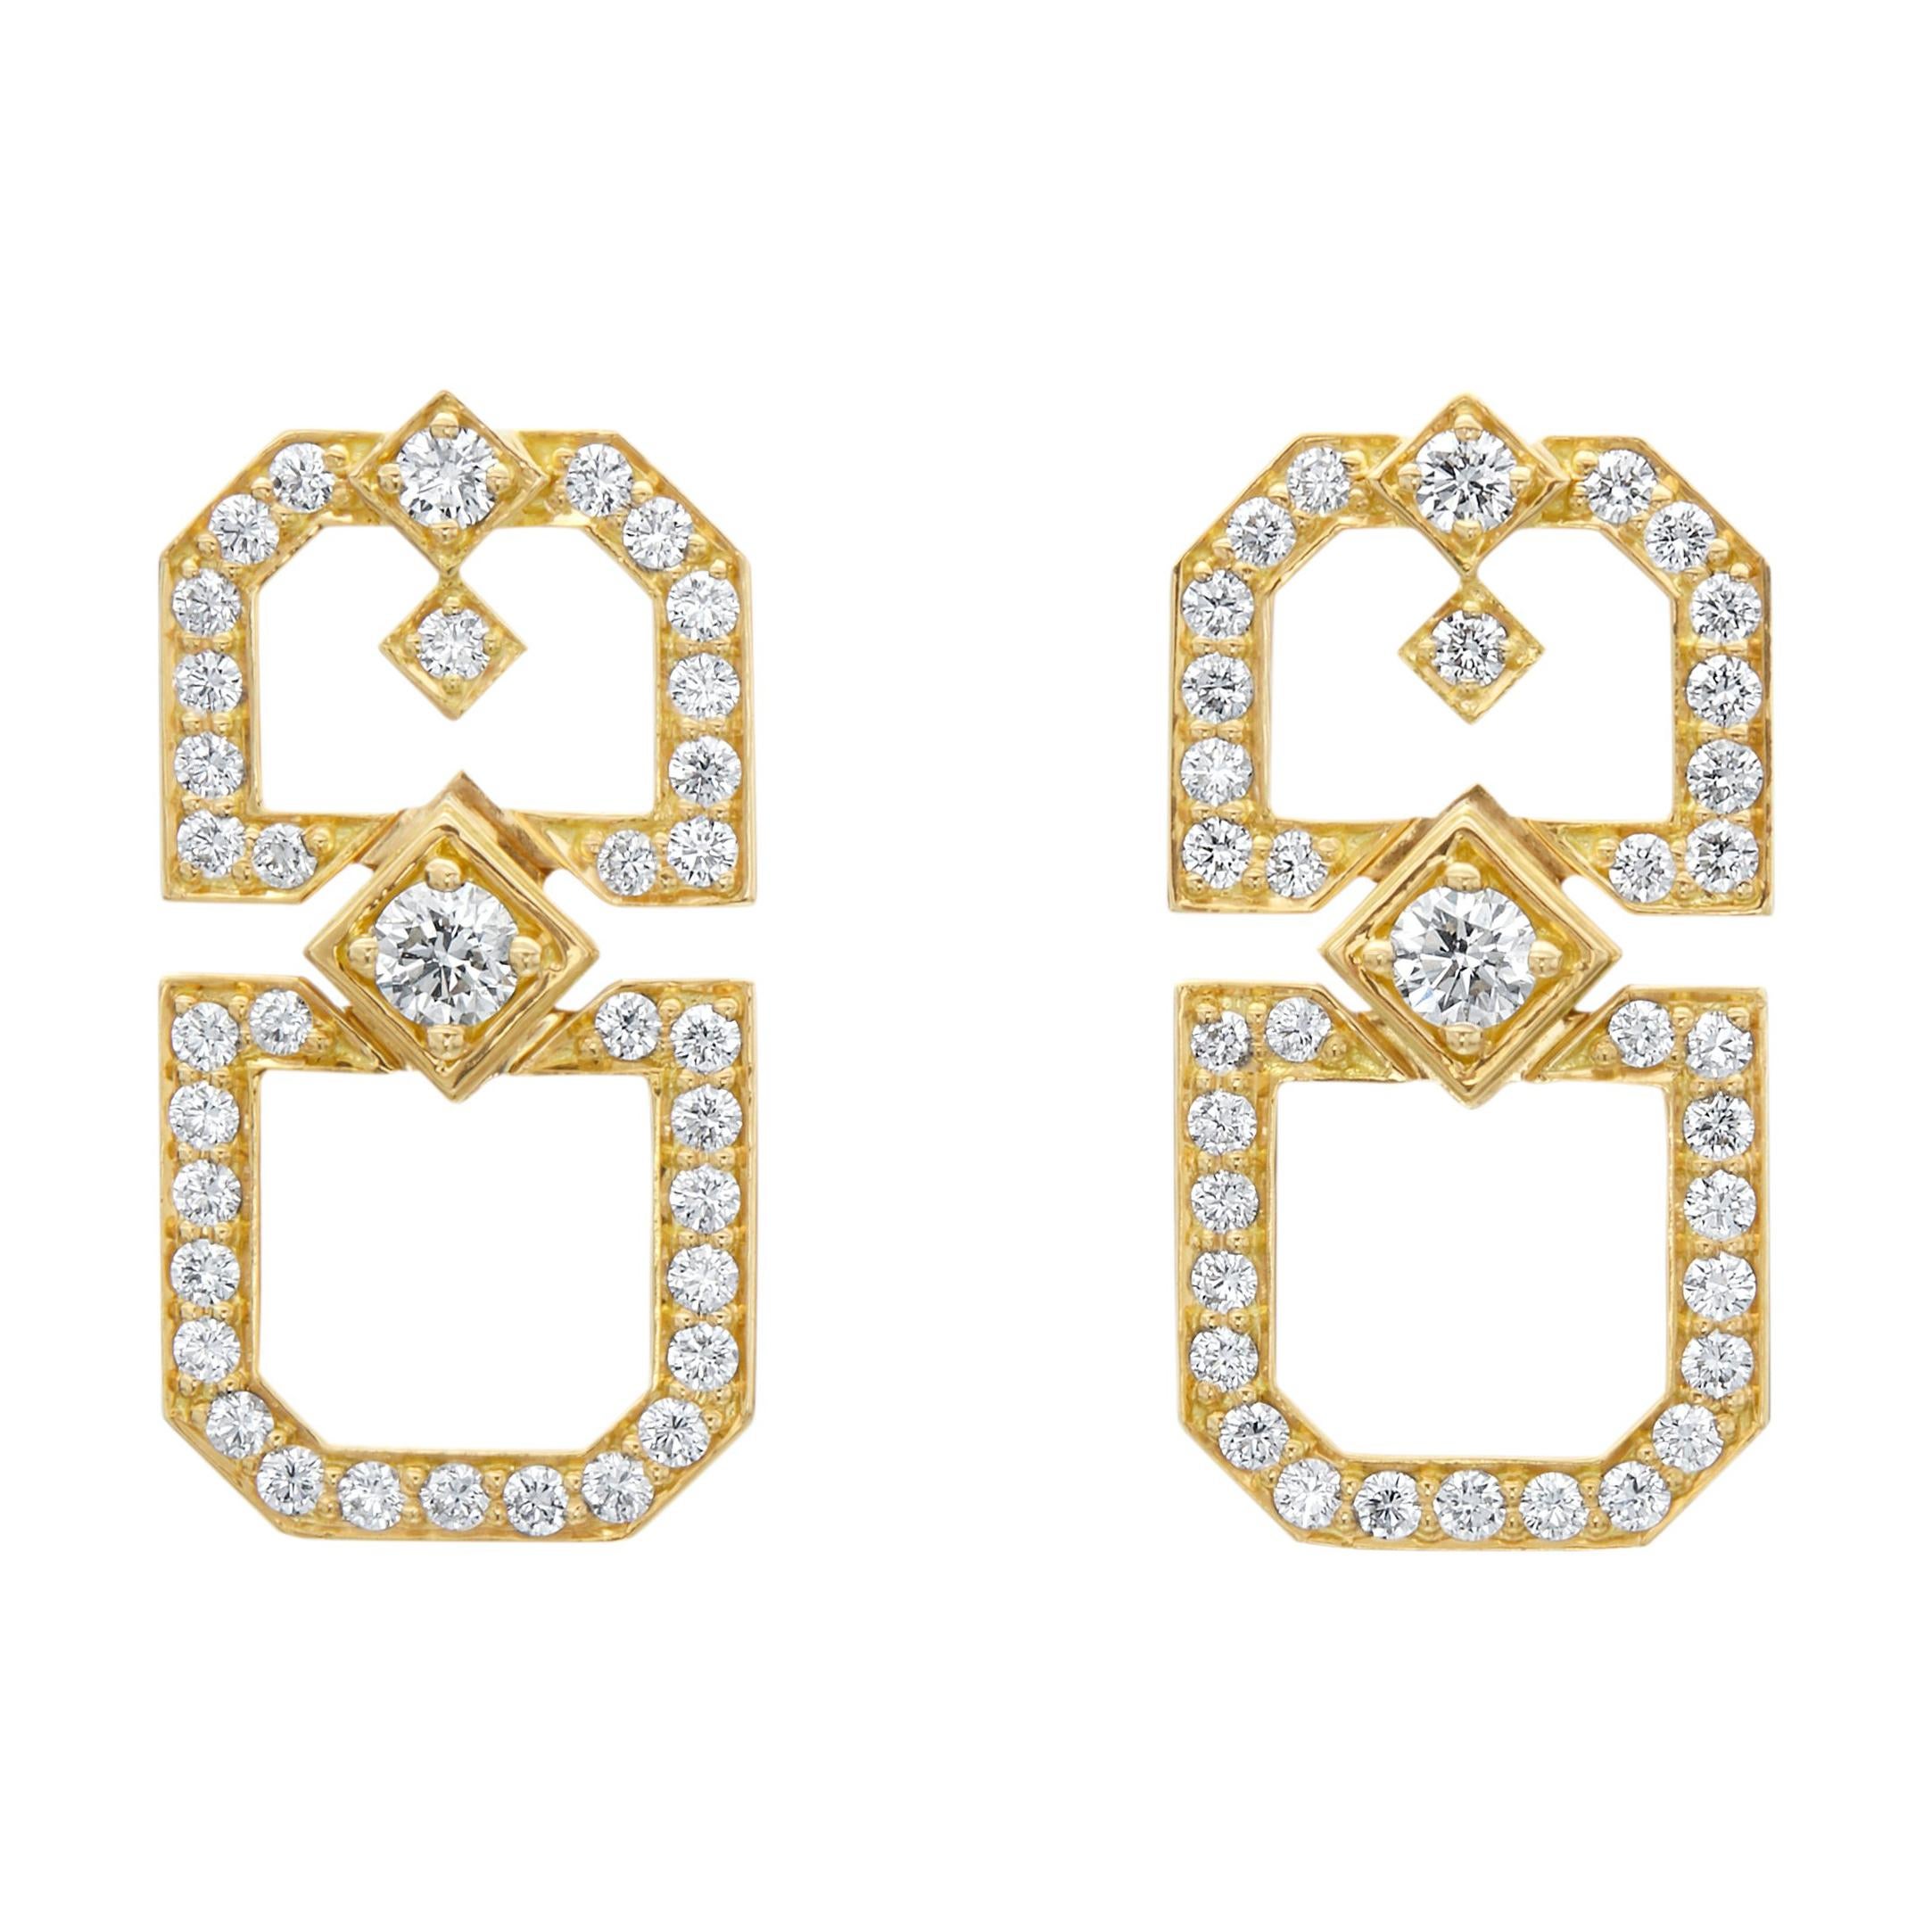 18 Karat Yellow Gold and Diamond "Deco Secret Garden" Earrings For Sale